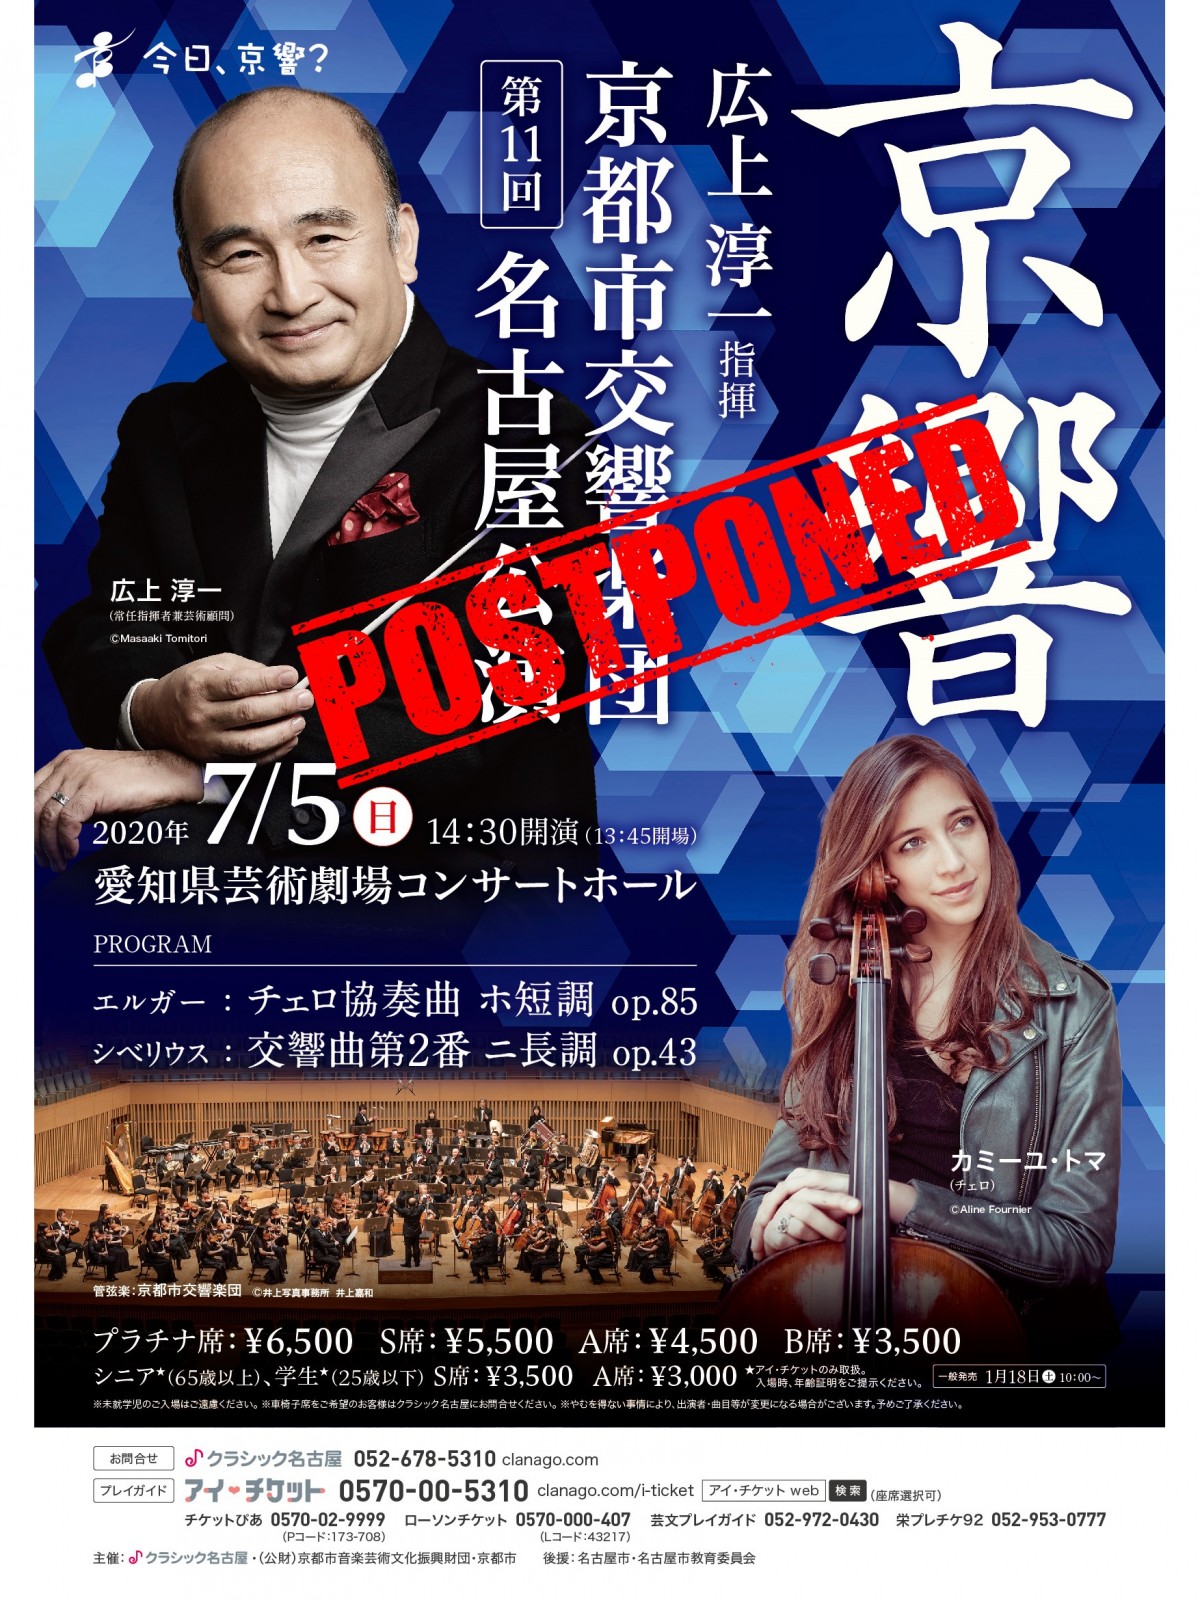 <POSTPONED>
The 11th Concert in Nagoya